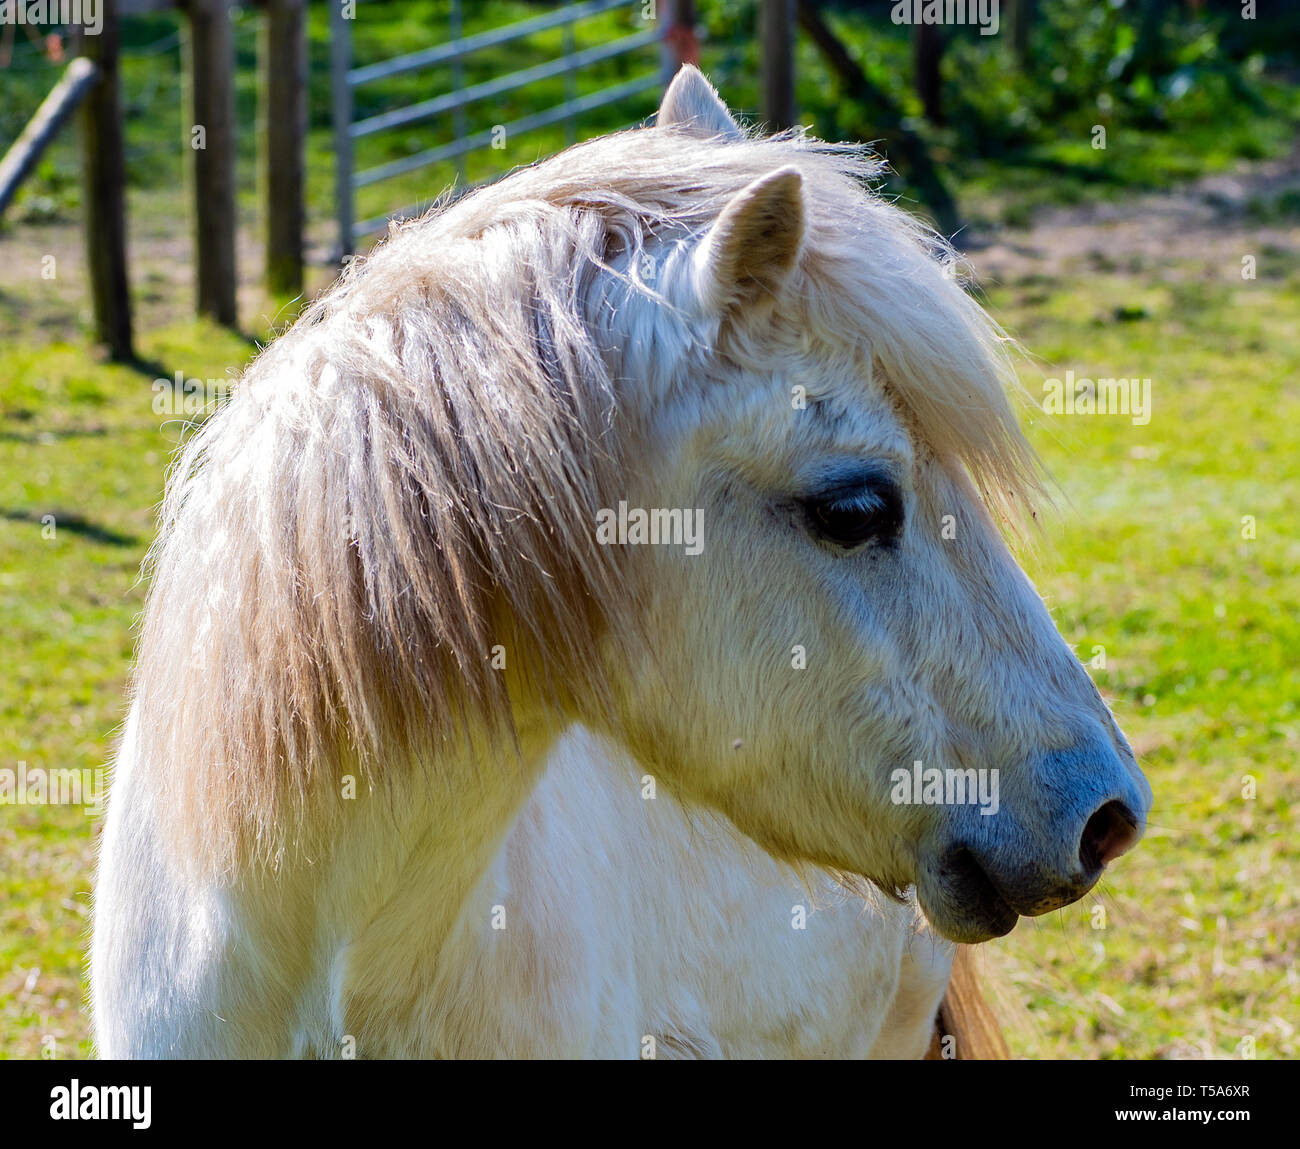 Bellissimo cavallo bianco a ribalta in legno Santuario animale, Crowhurst, East Sussex, Inghilterra Foto Stock